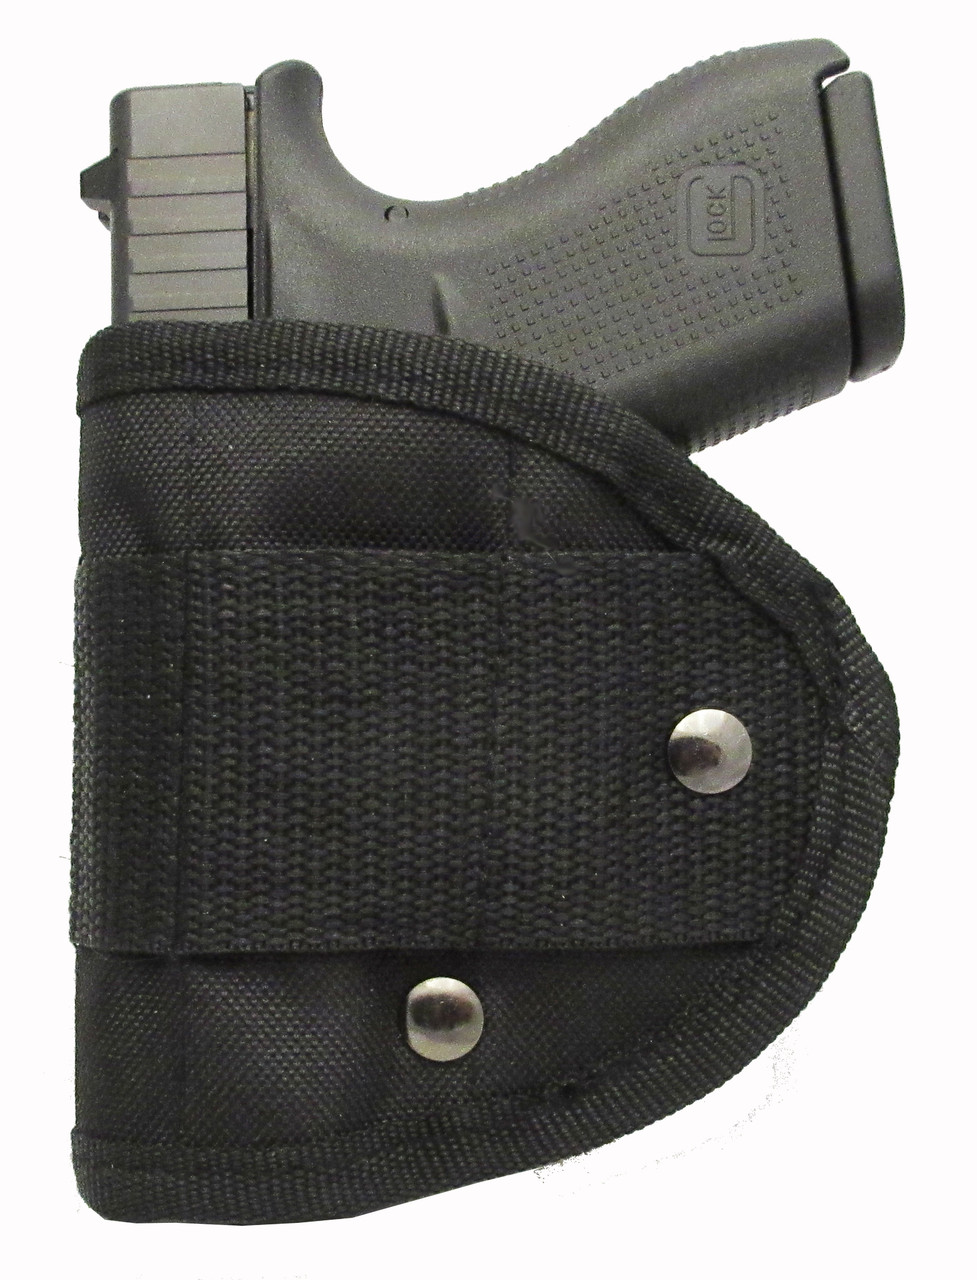 G43 For Glock 43 IWB Inside the Waistband Concealed Carry Soft Gun Holster 